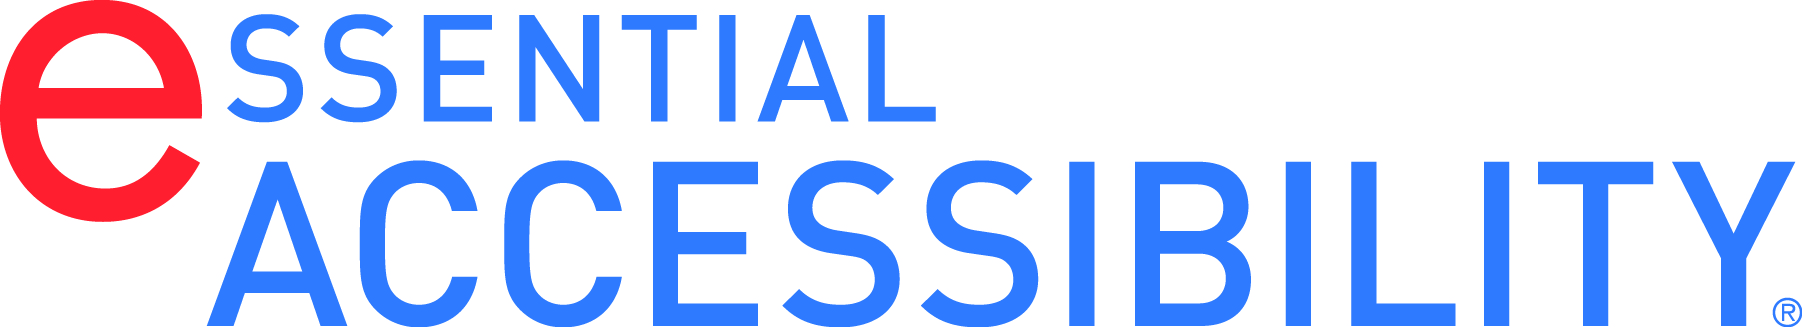 essential accessibility logo